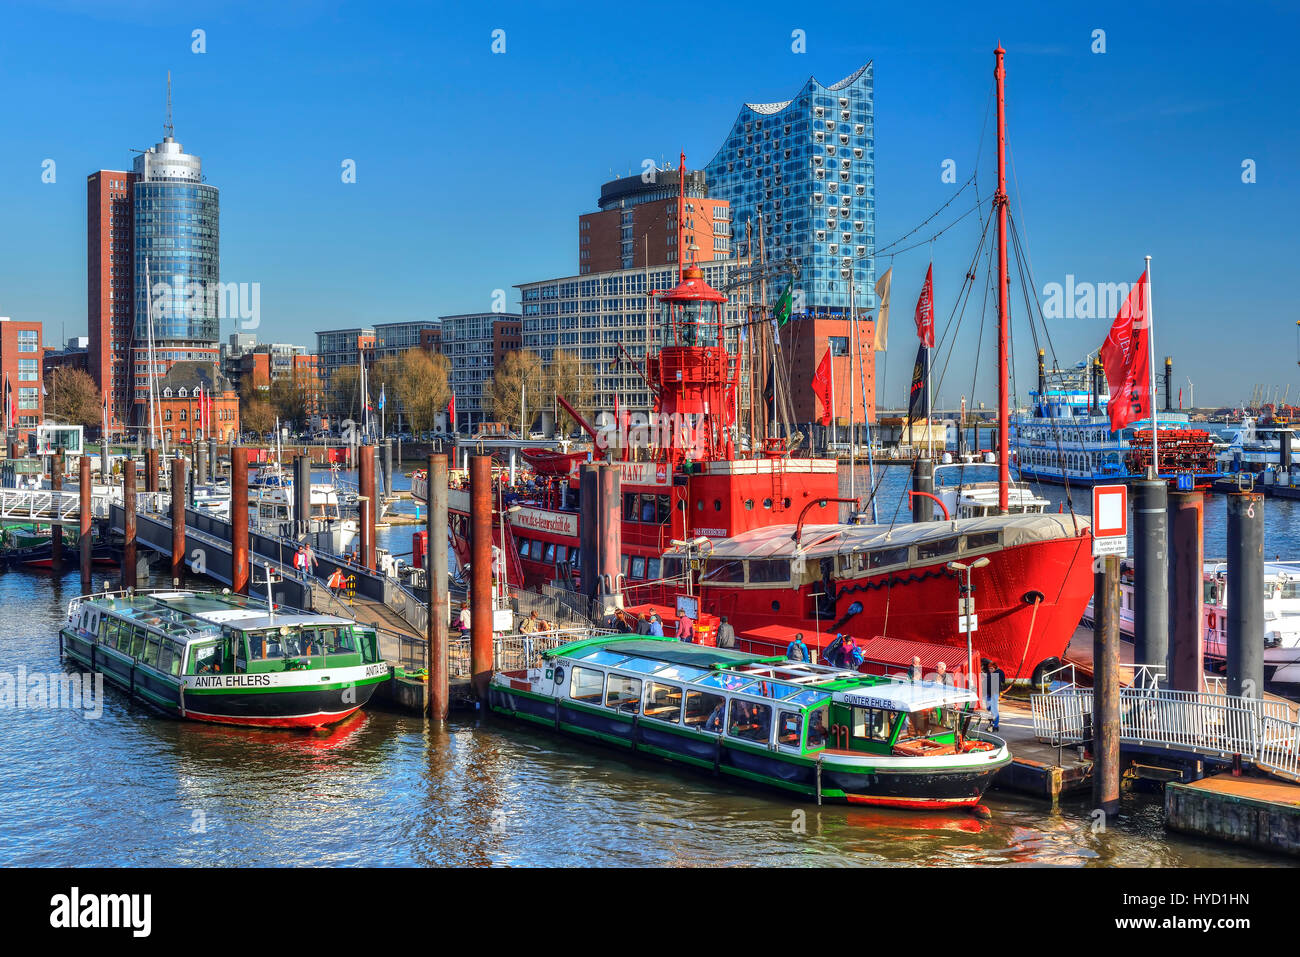 Port of Hamburg, Germany Stock Photo - Alamy